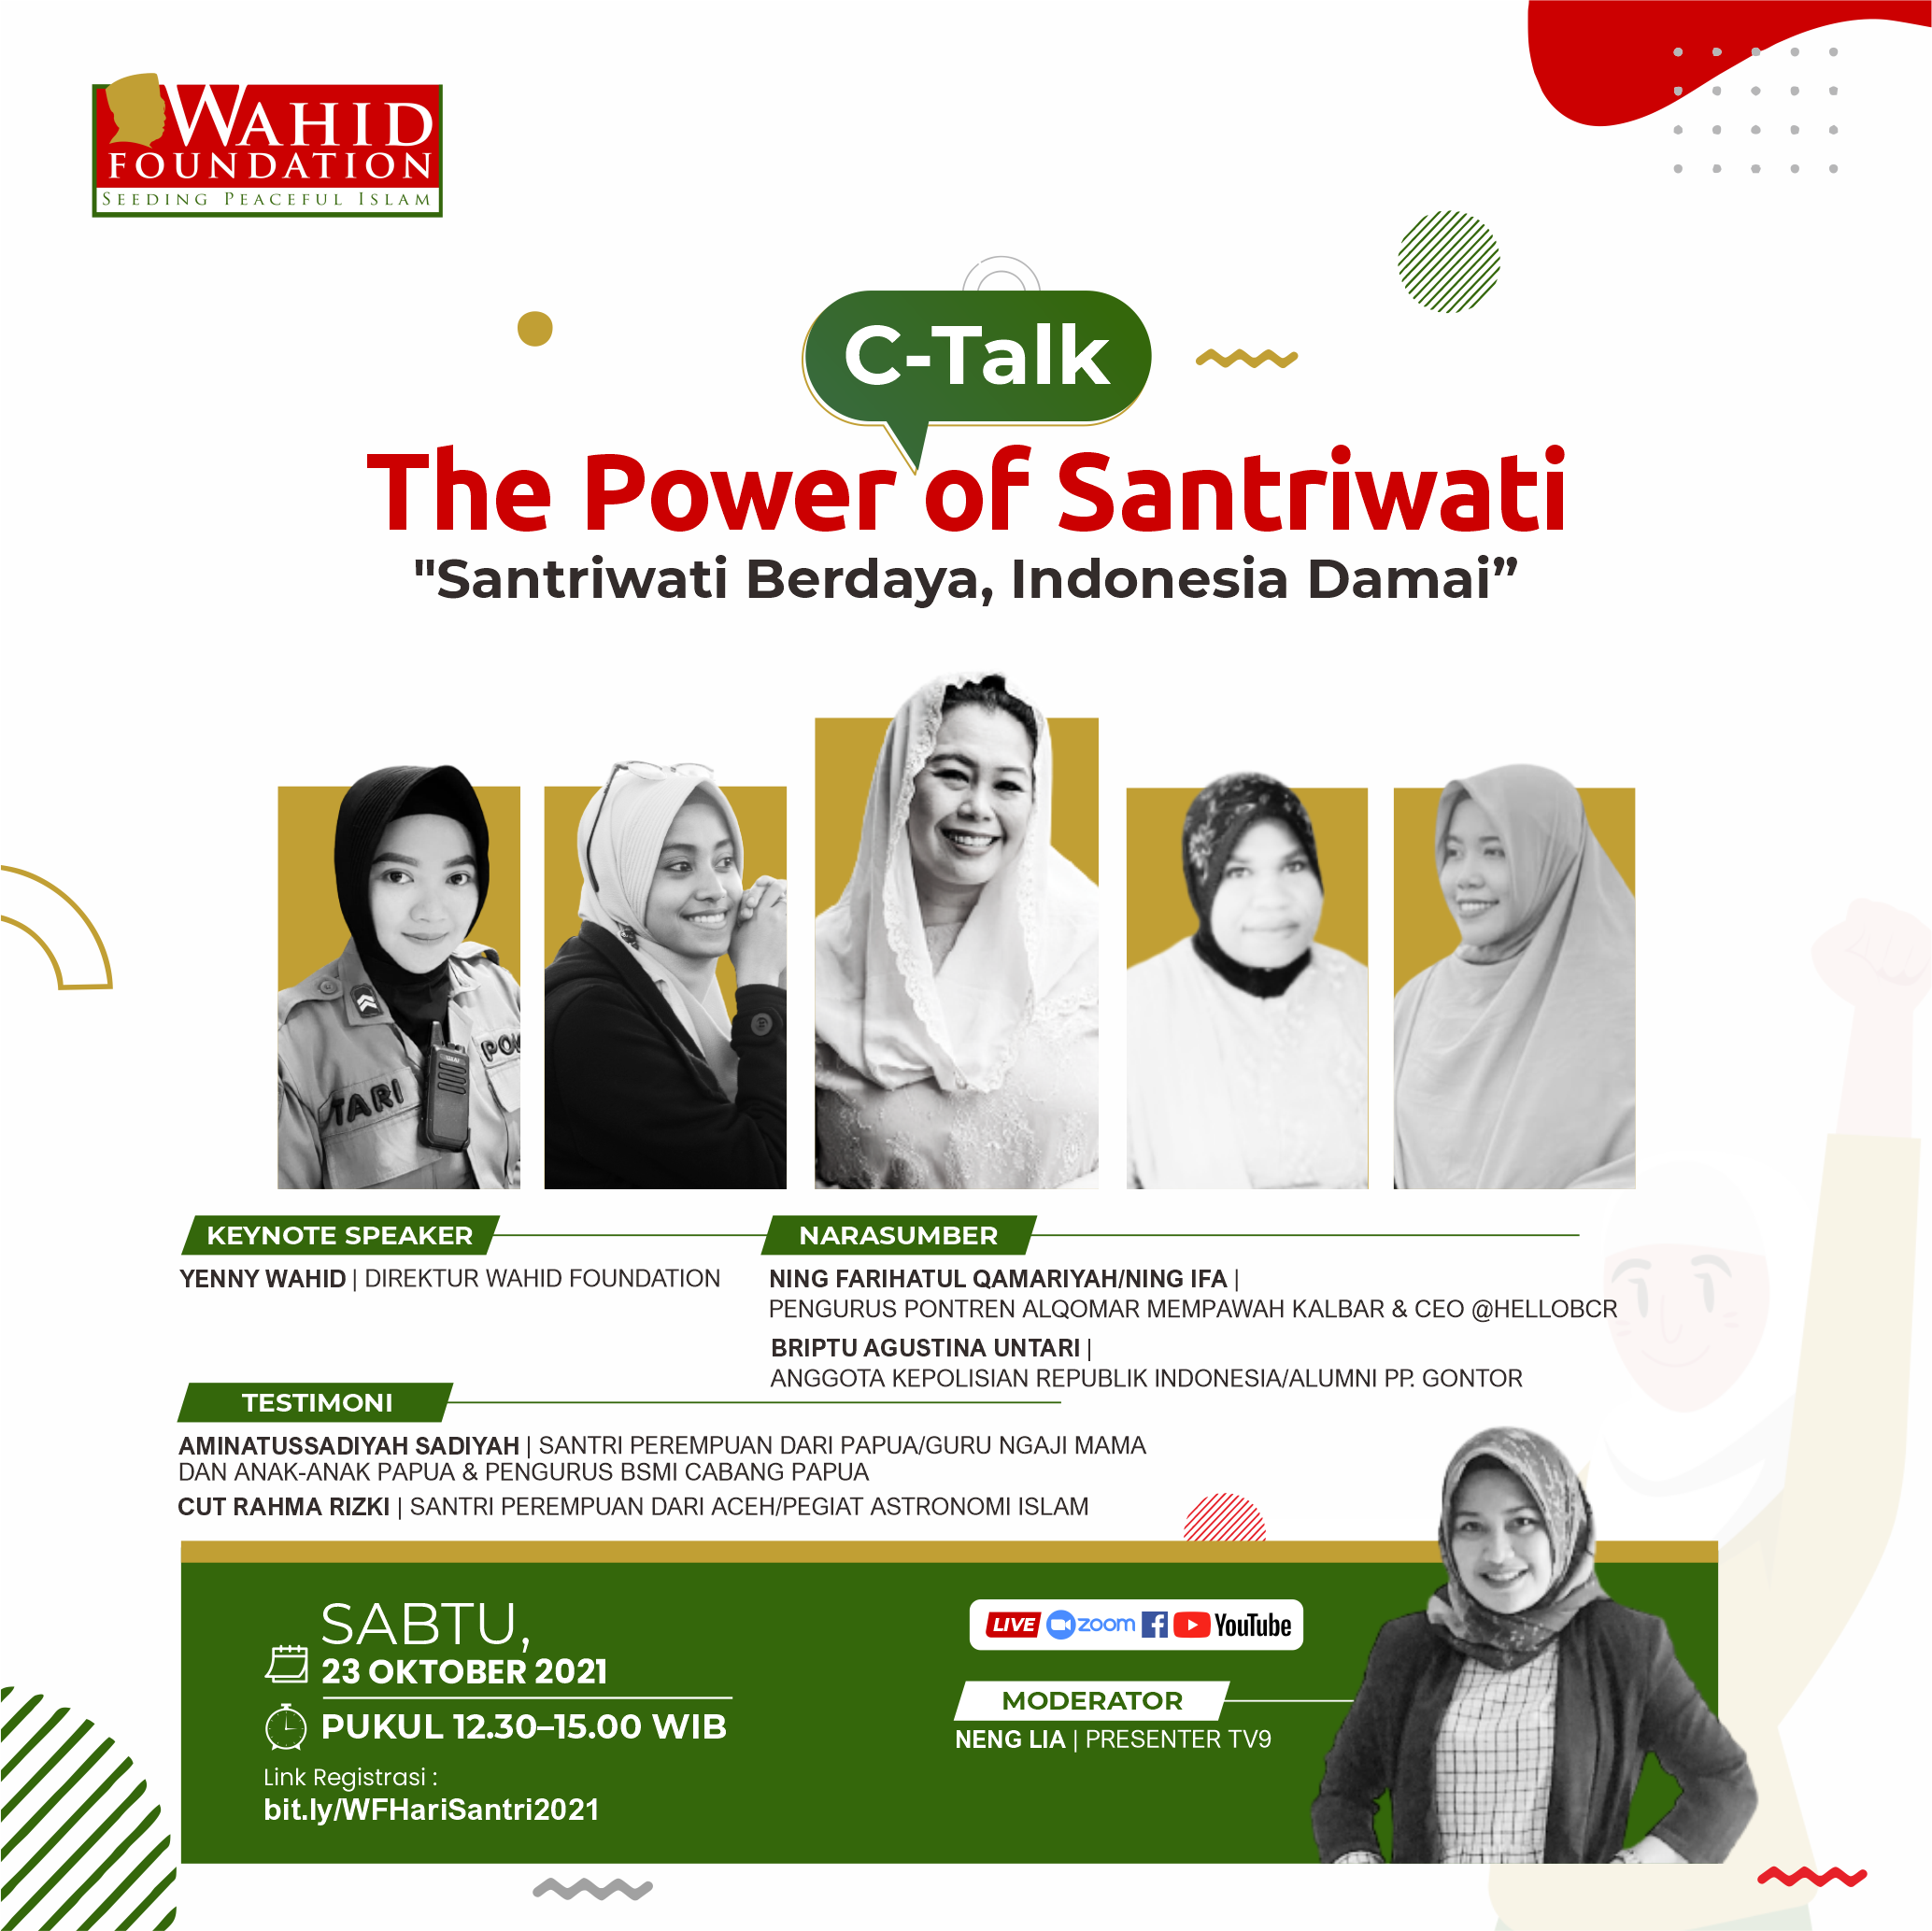 Peringati Hari Santri, Wahid Foundation Gelar Webinar The Power of Santriwati, “Santriwati Berdaya, Indonesia Damai”